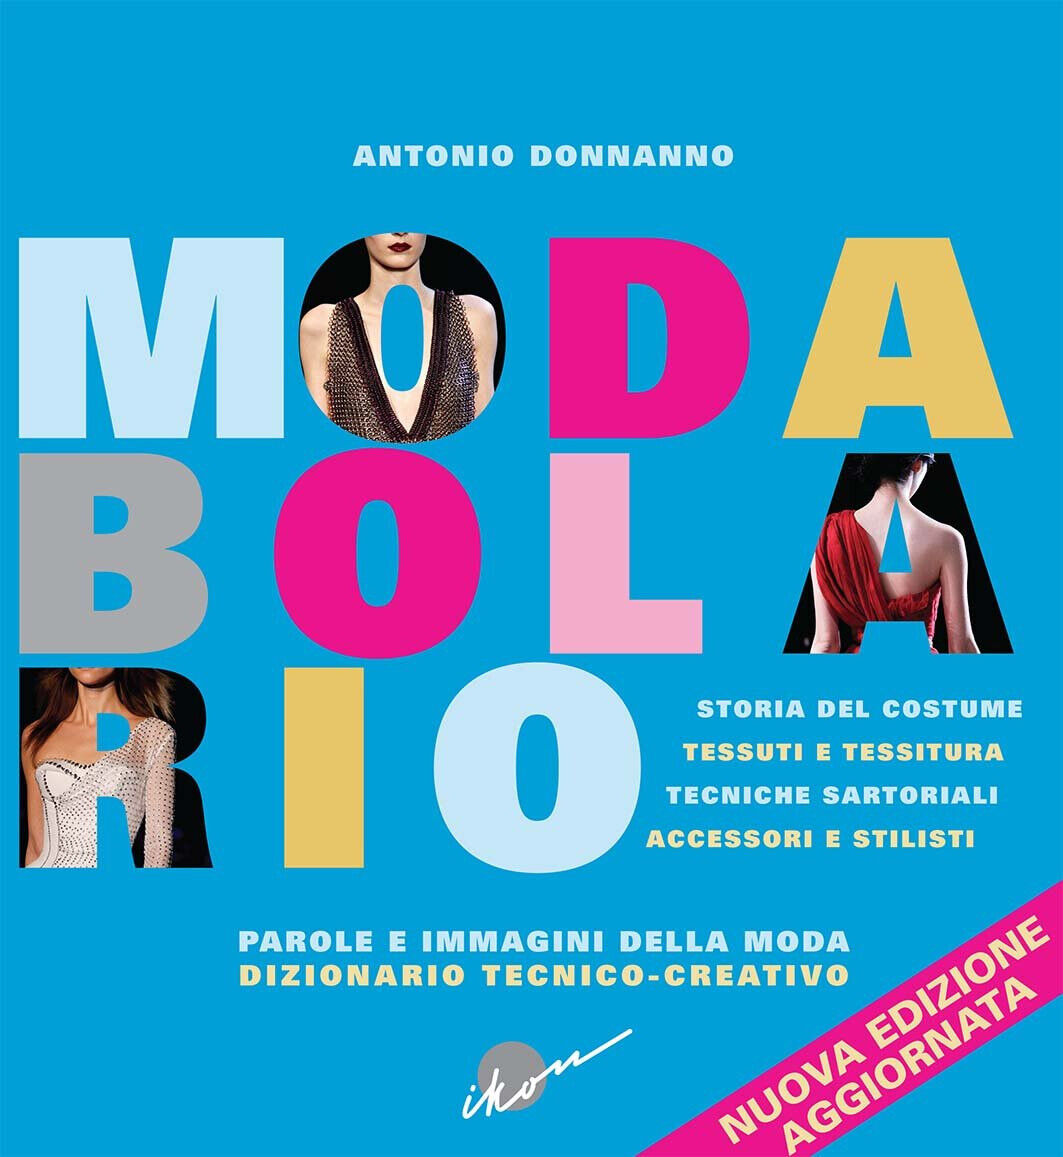 Modabolario - Antonio Donnanno - Ikon, 2018